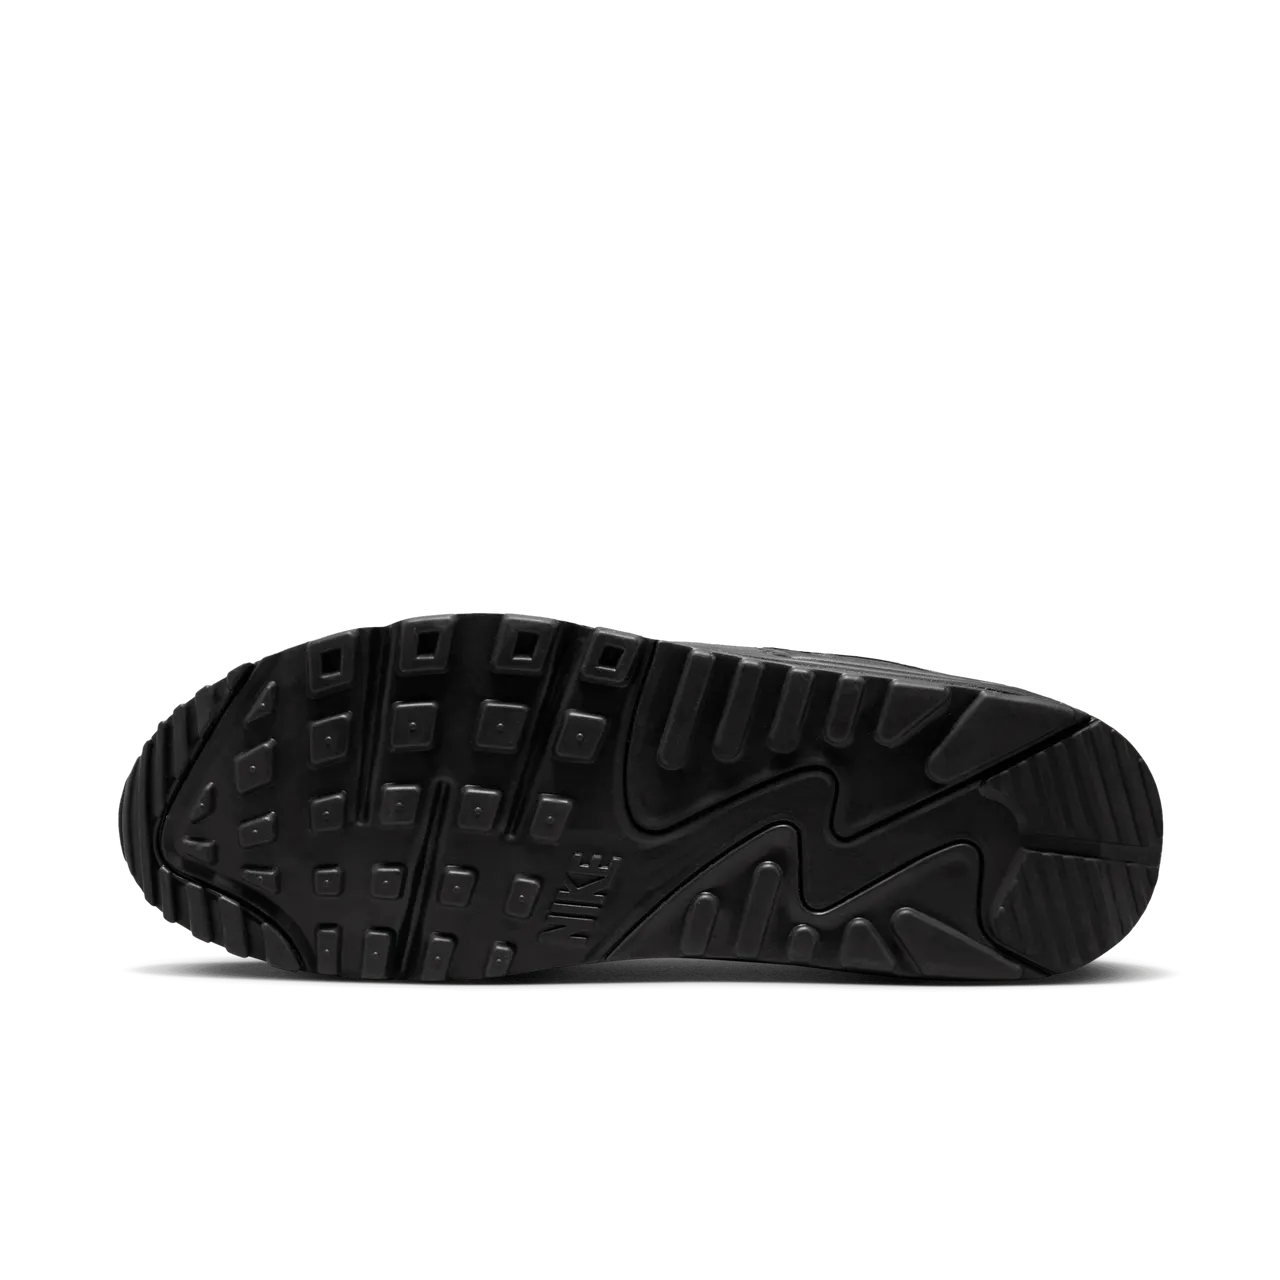 Nike Air Max 90 Men's Shoes - Black